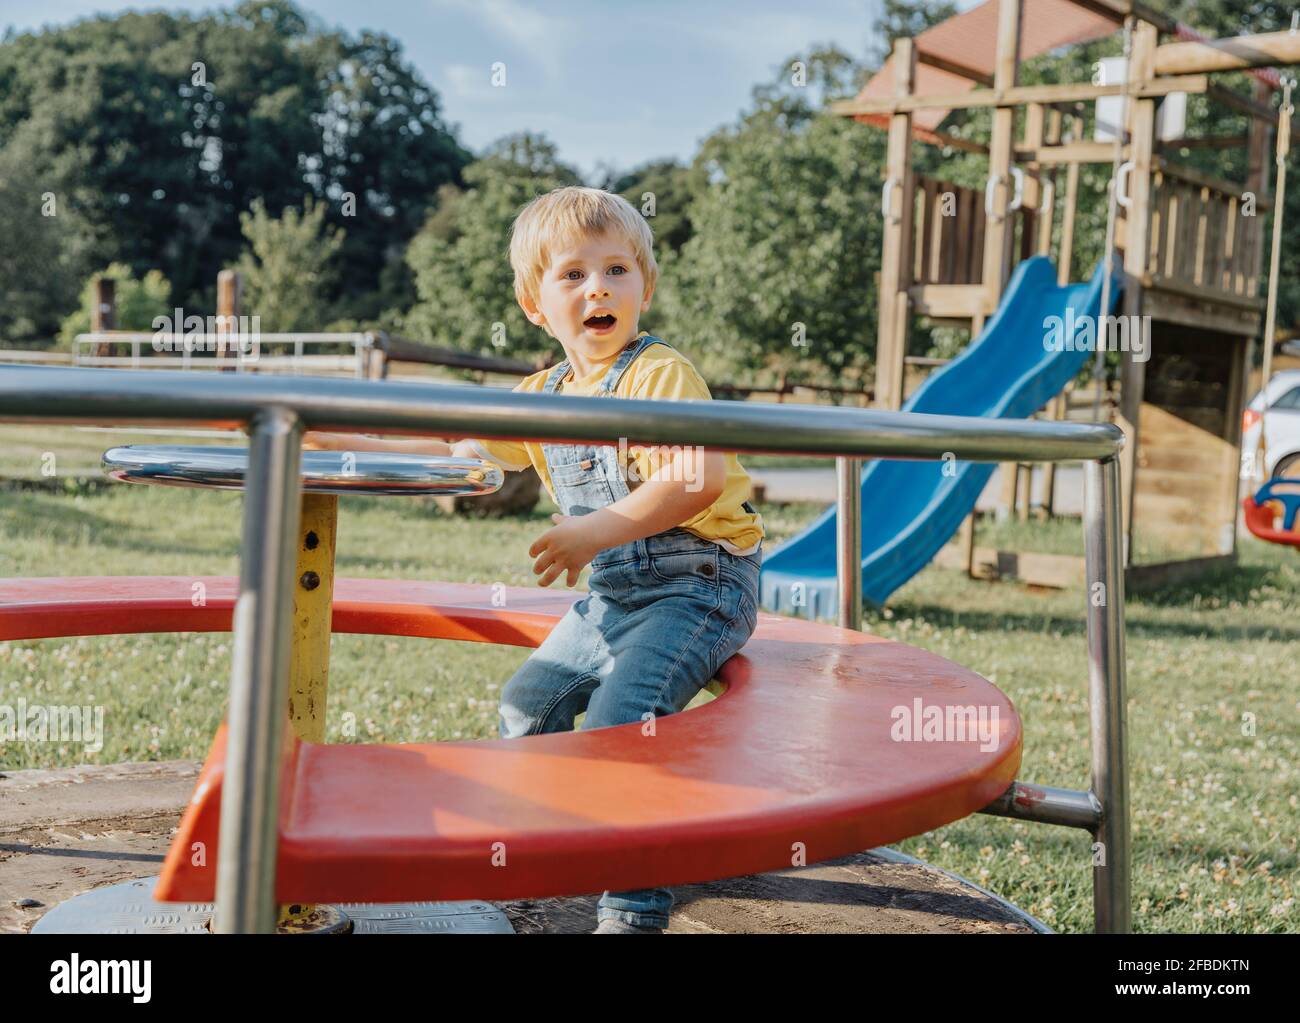 Charming boy sitting on merry go round in playground Stock Photo